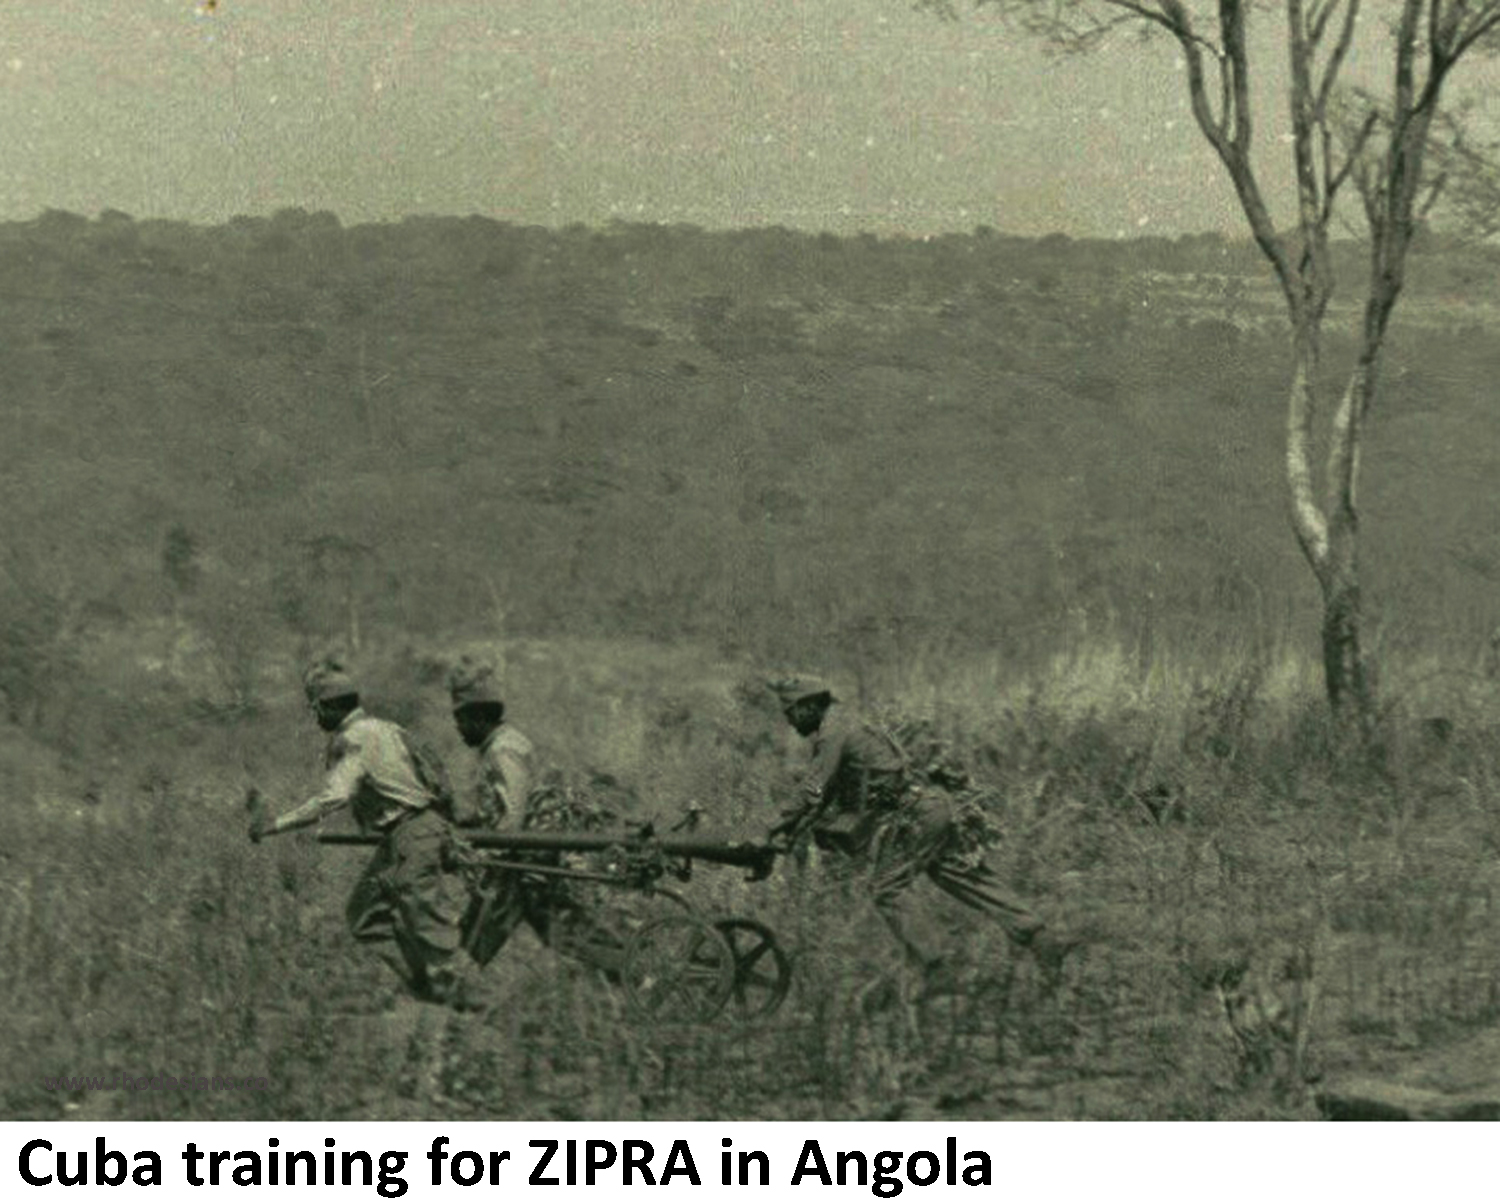 ZIPRA communist terrorits training in Angola